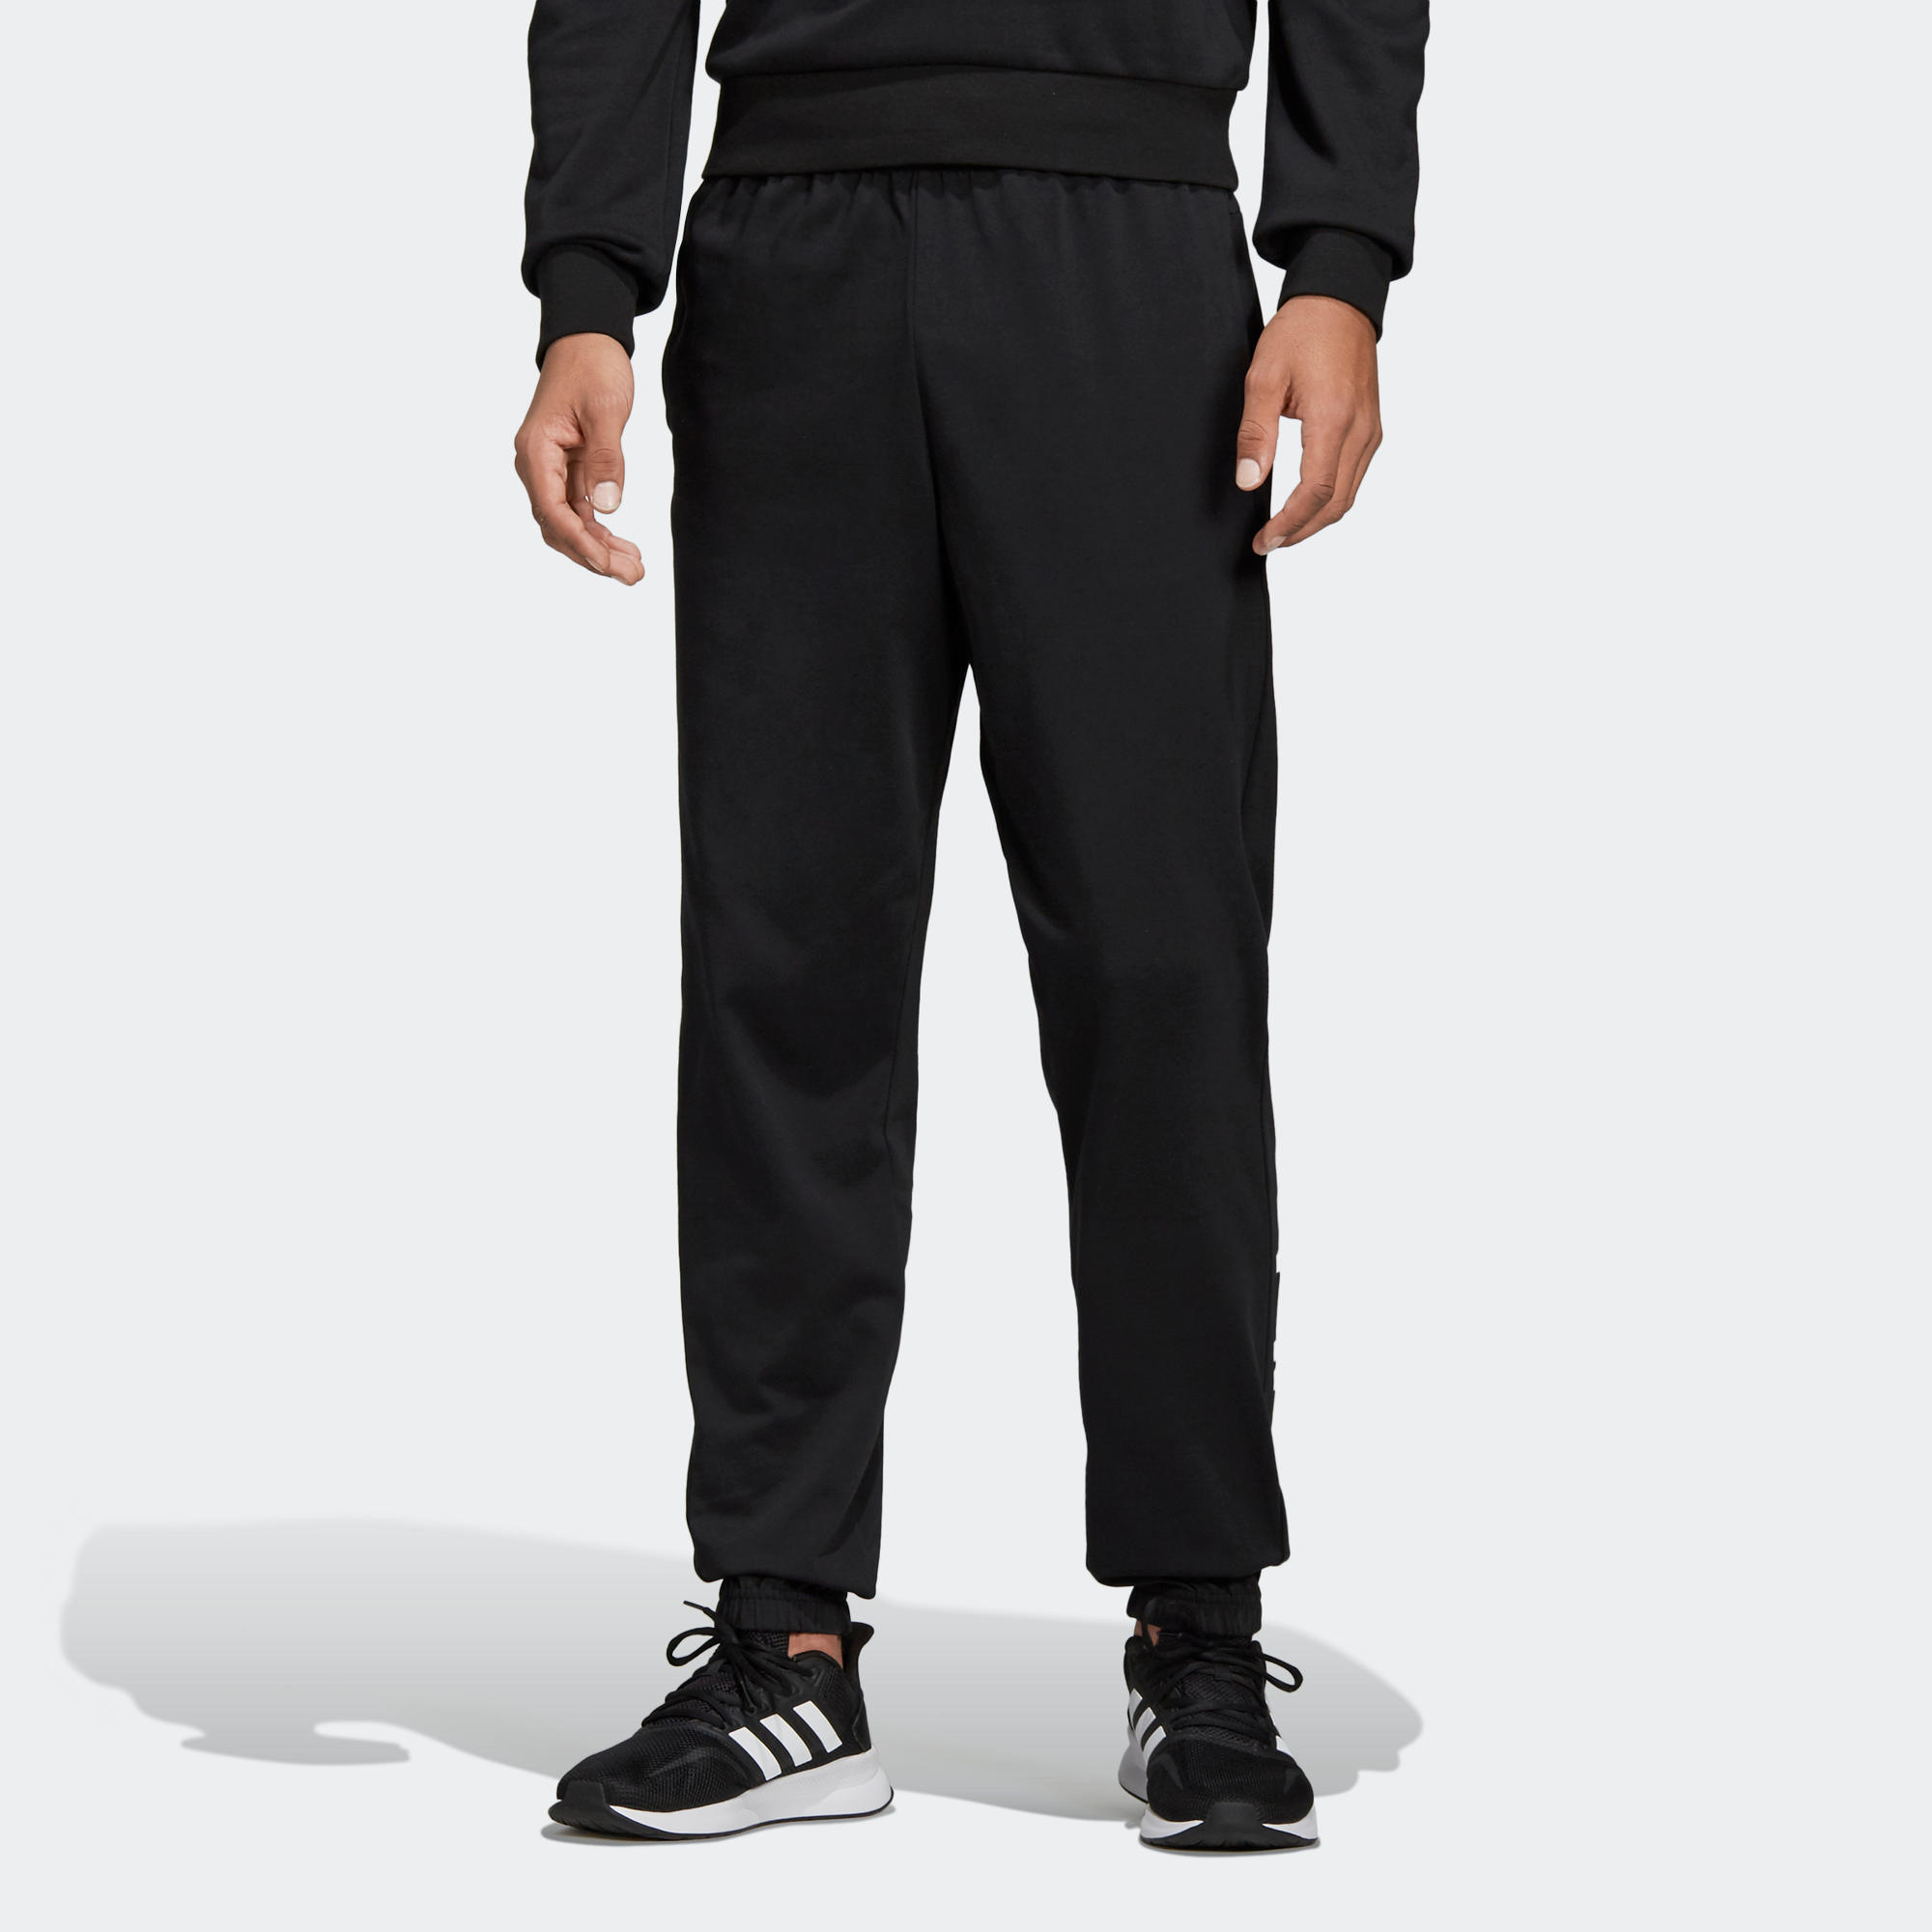 Pantalon de survêtement ADIDAS homme noir Adidas | Decathlon